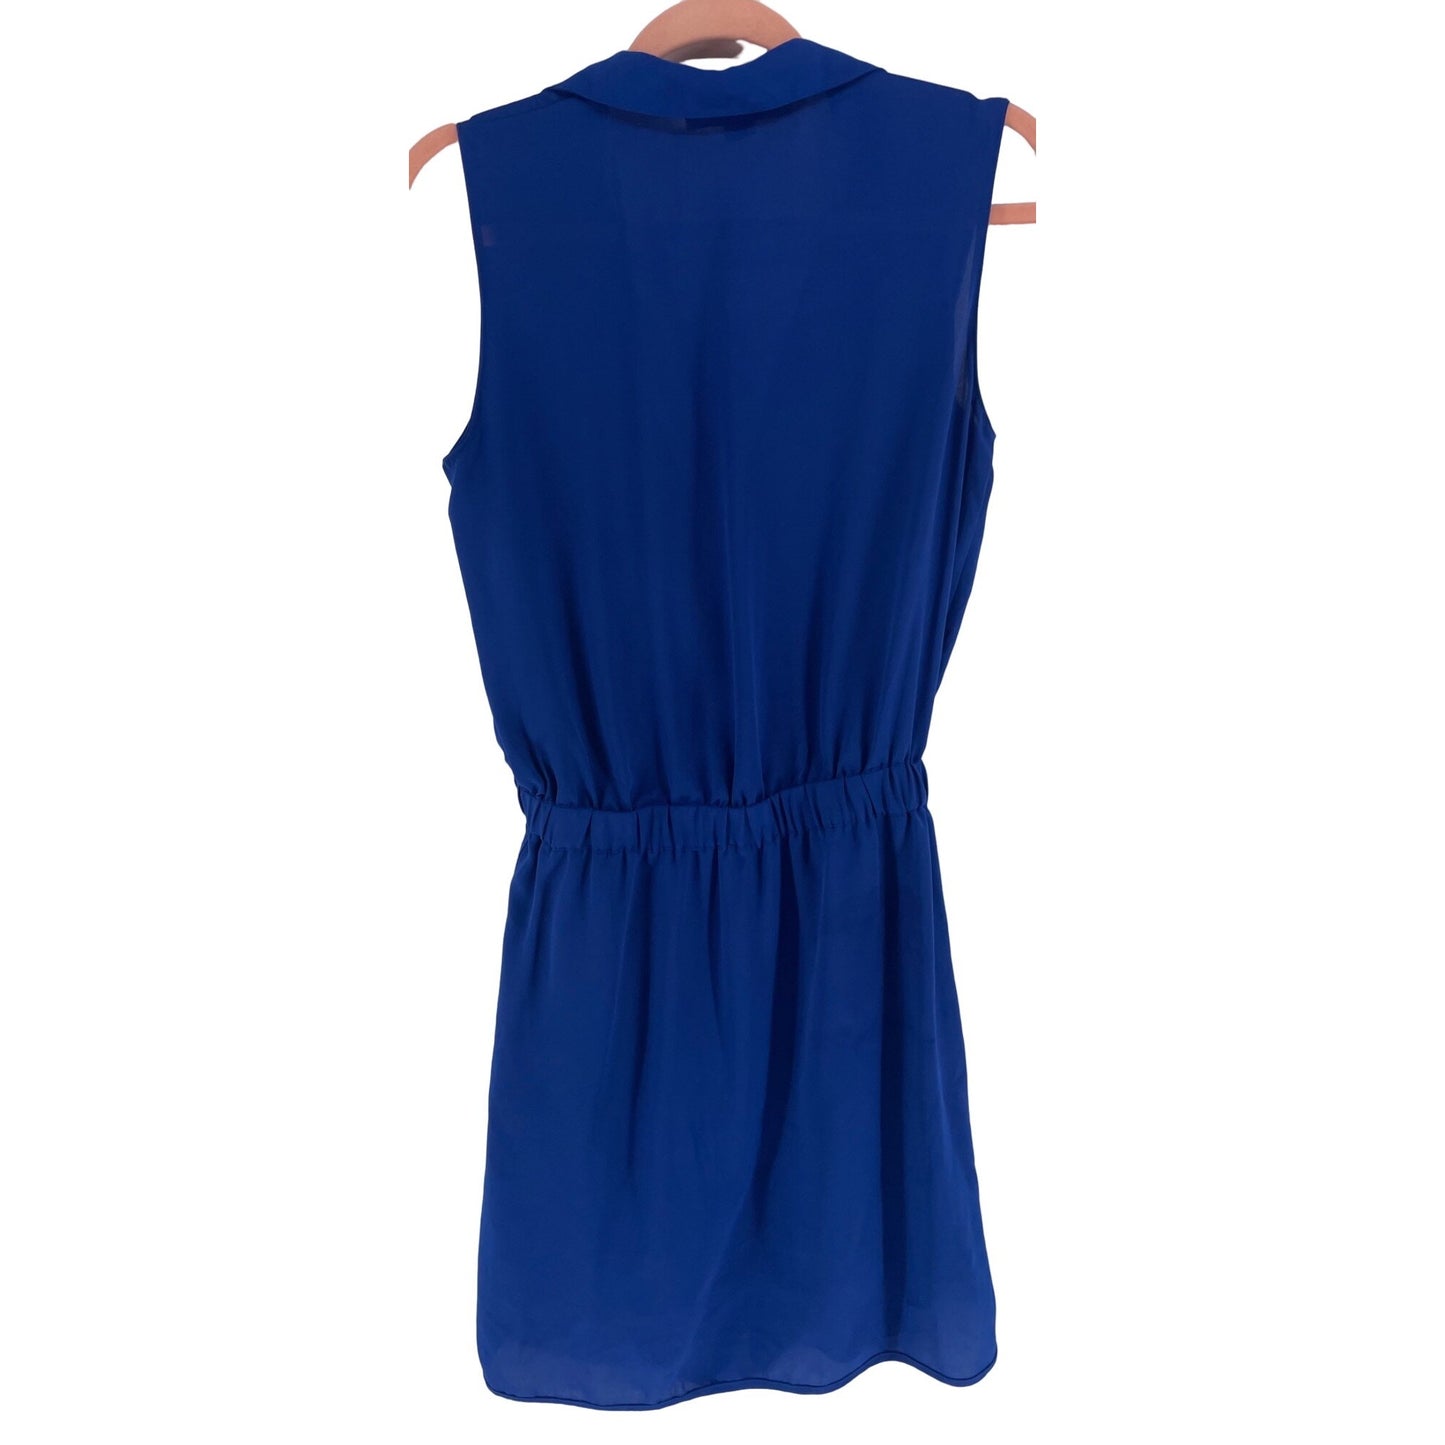 Forever 21 Women's Size XS Cobalt Blue Collared Sleeveless Elastic Waist Dress